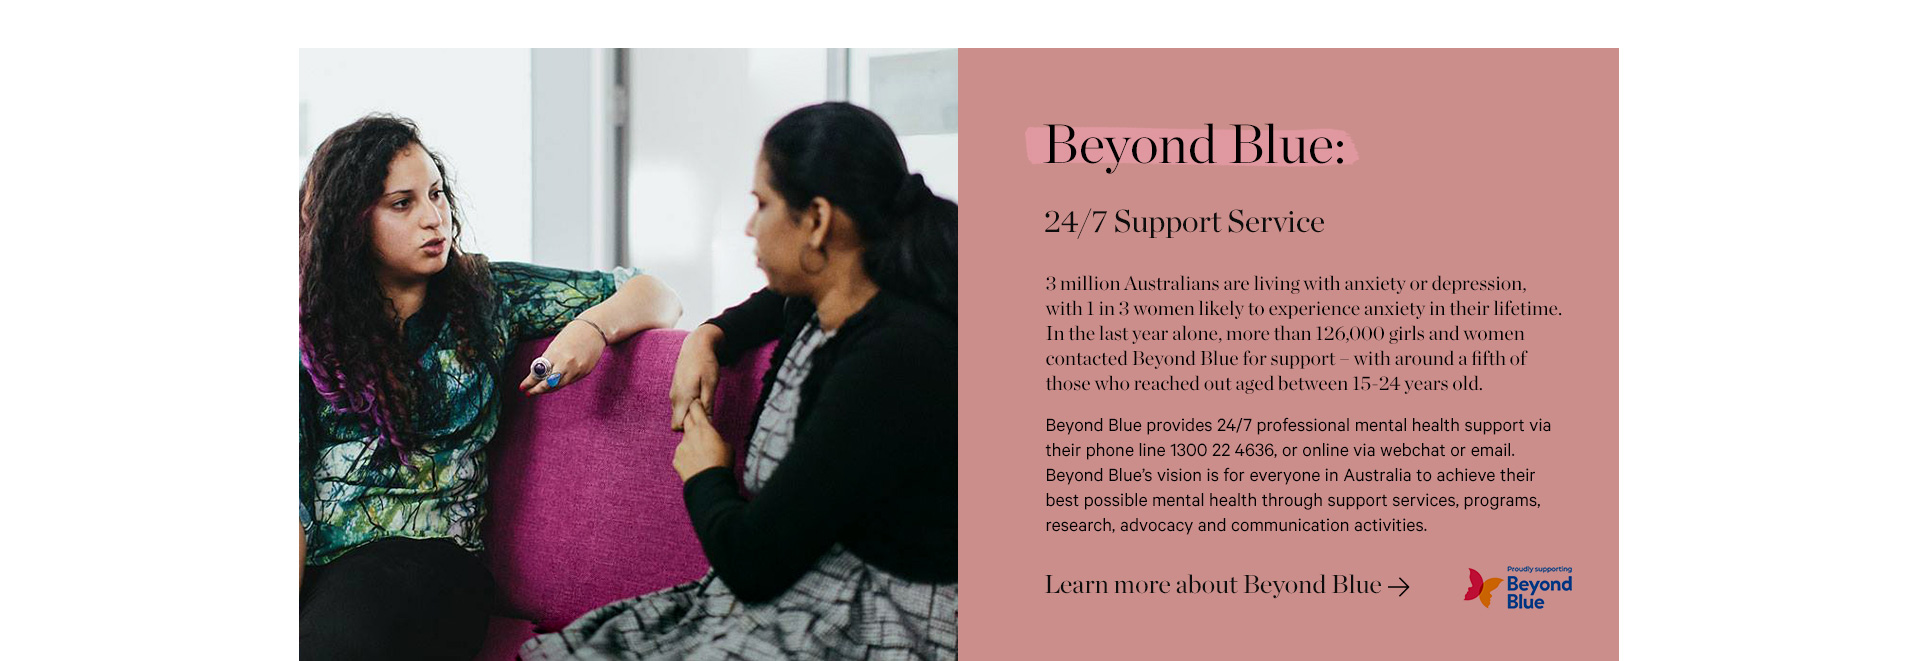 Beyond Blue Charity 